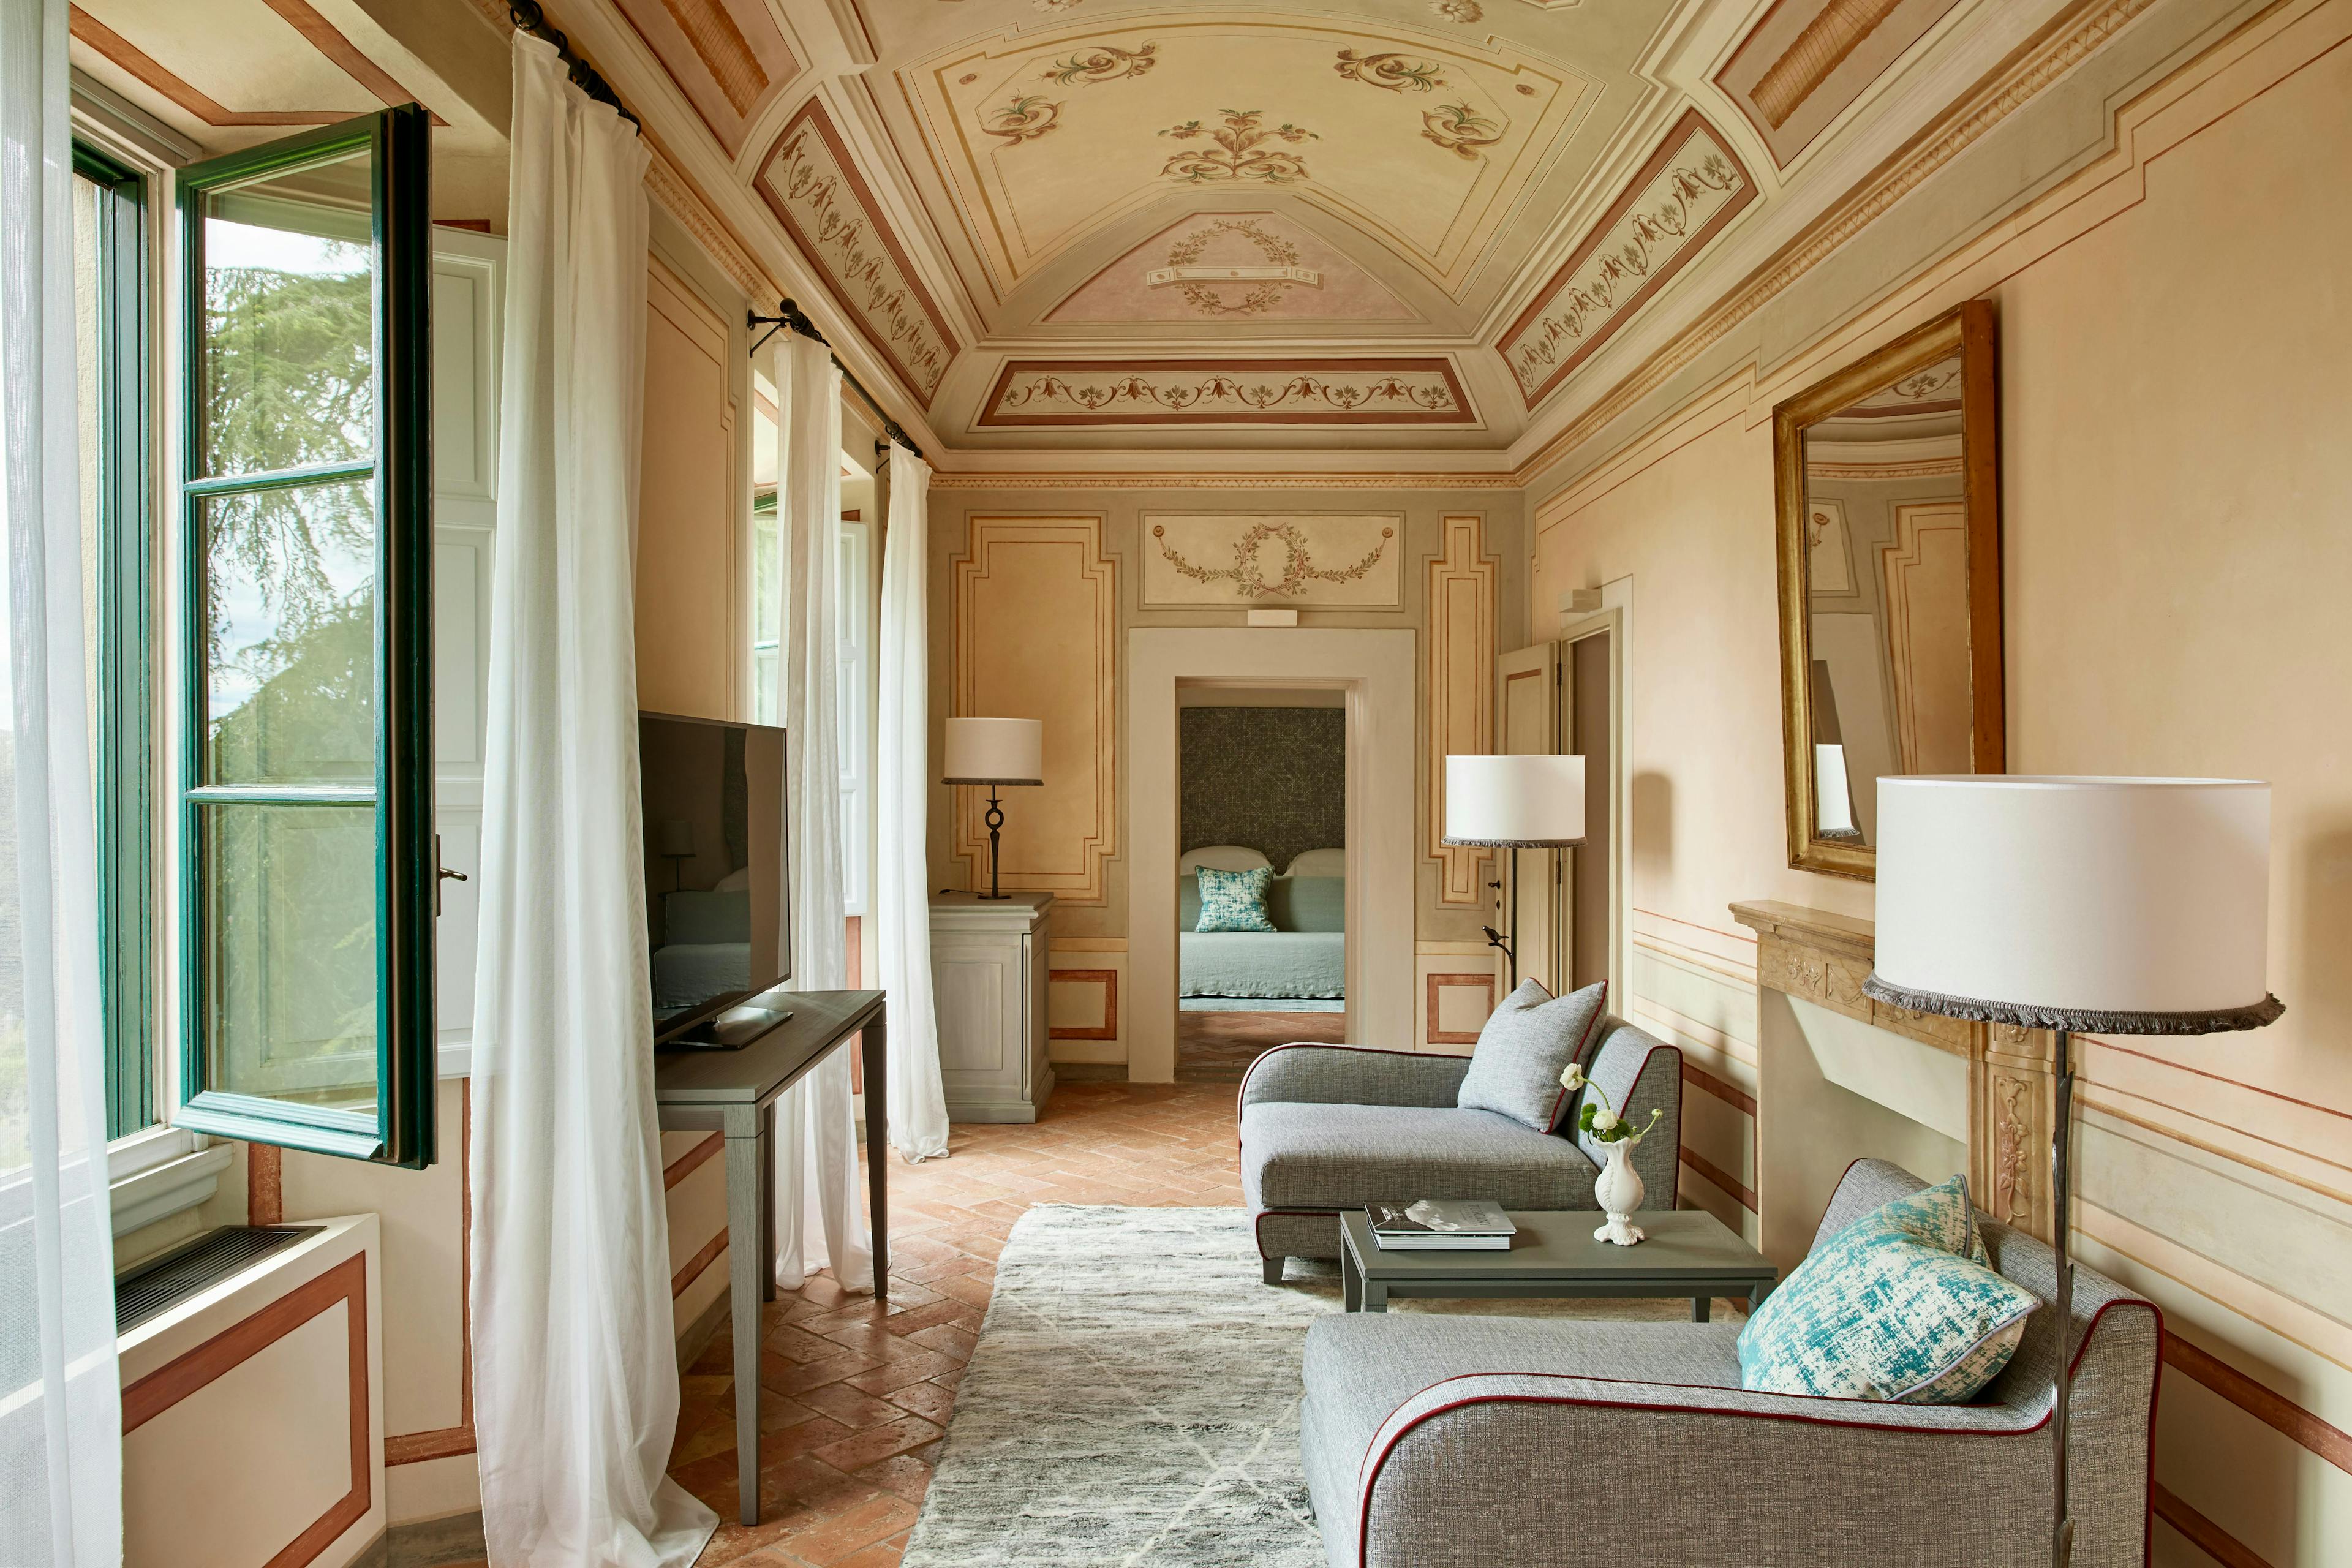 castello del nero como como hotels and resorts italy hotel europe tuscany sala gran camino flooring room indoors living room furniture floor couch